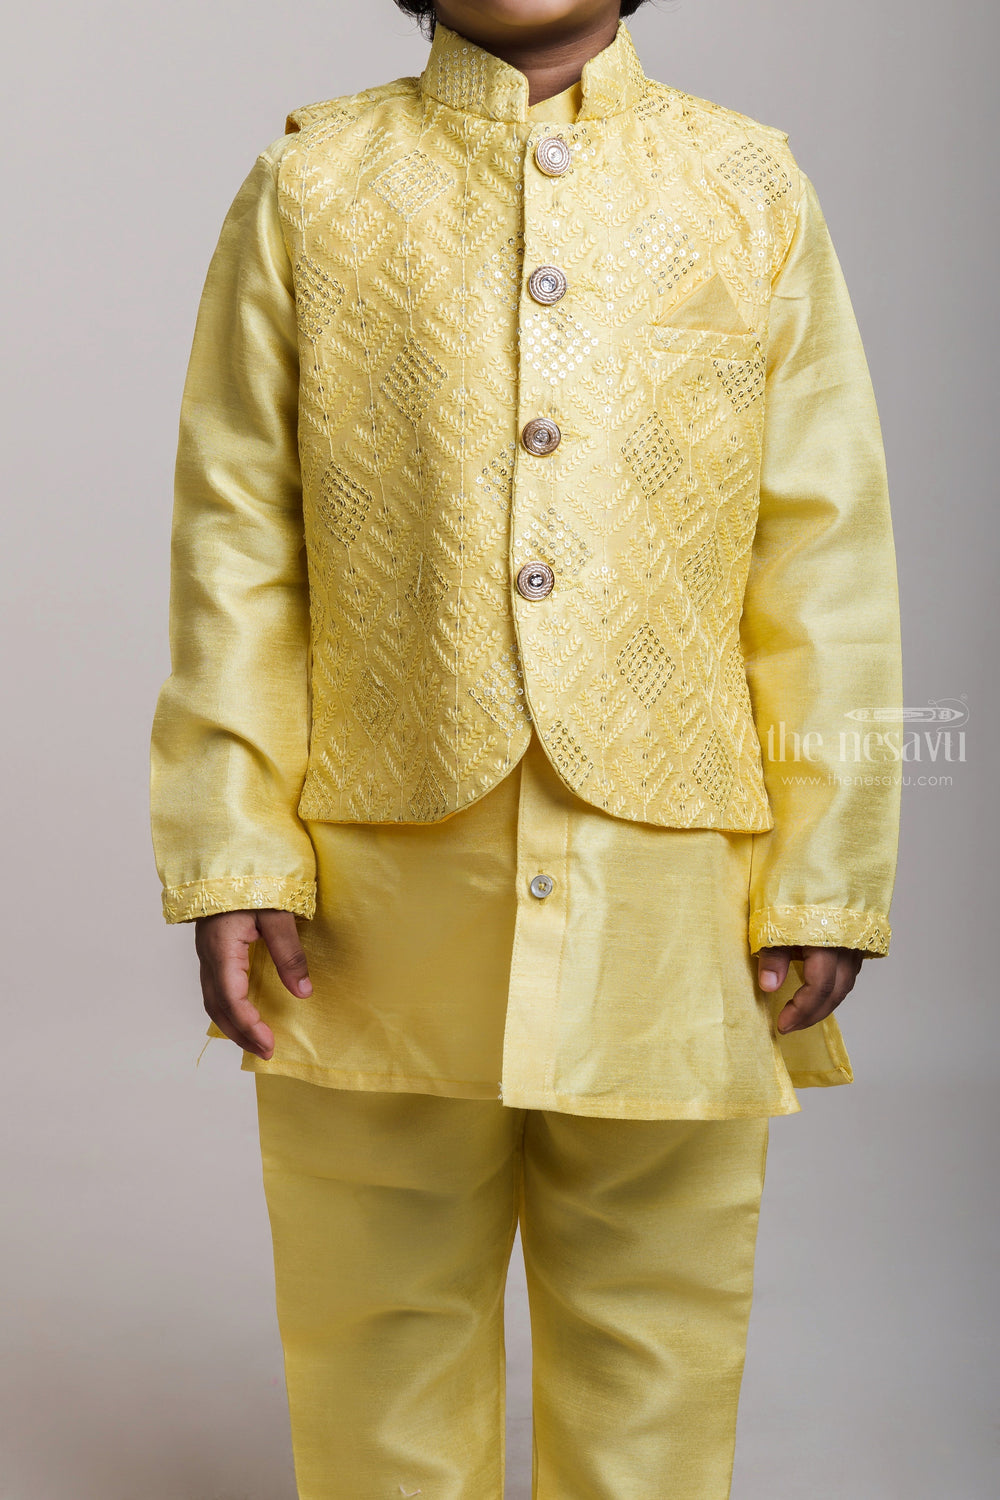 The Nesavu Boys Jacket Sets Complete Yellow Kurta Set With Printed Overjacket For Baby Boys Nesavu Yellow Kurta Set Collection For Boys| Festive Special| The Nesavu